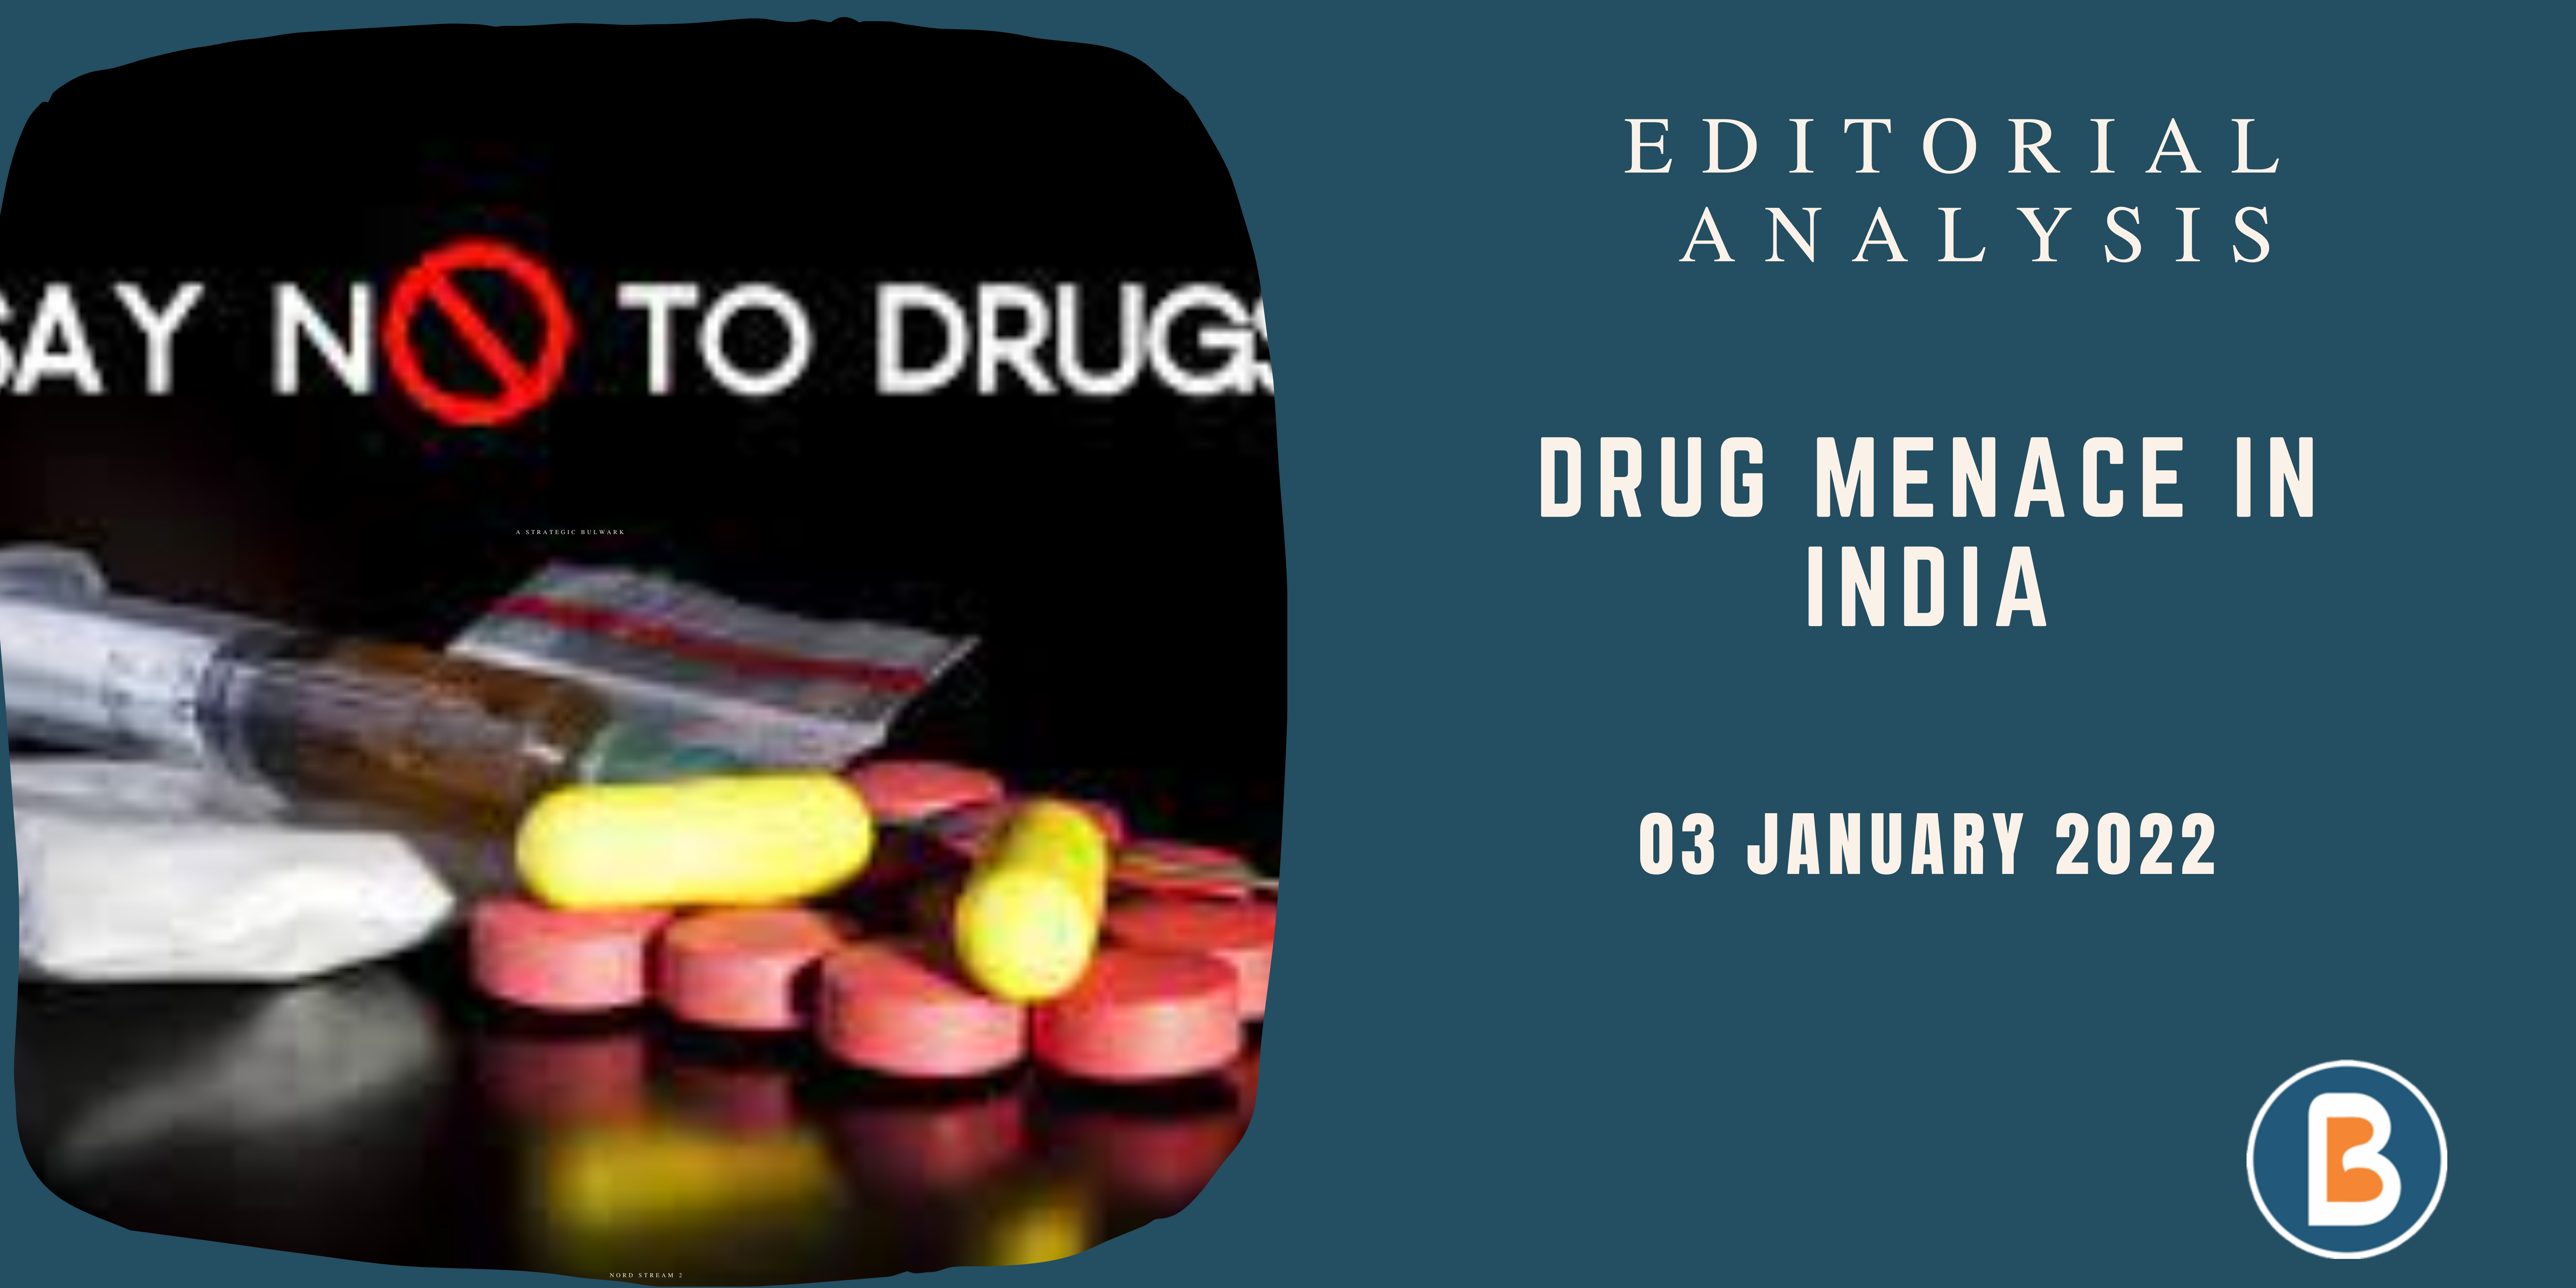 Editorial Analysis for UPSC - DRUG MENACE IN INDIA